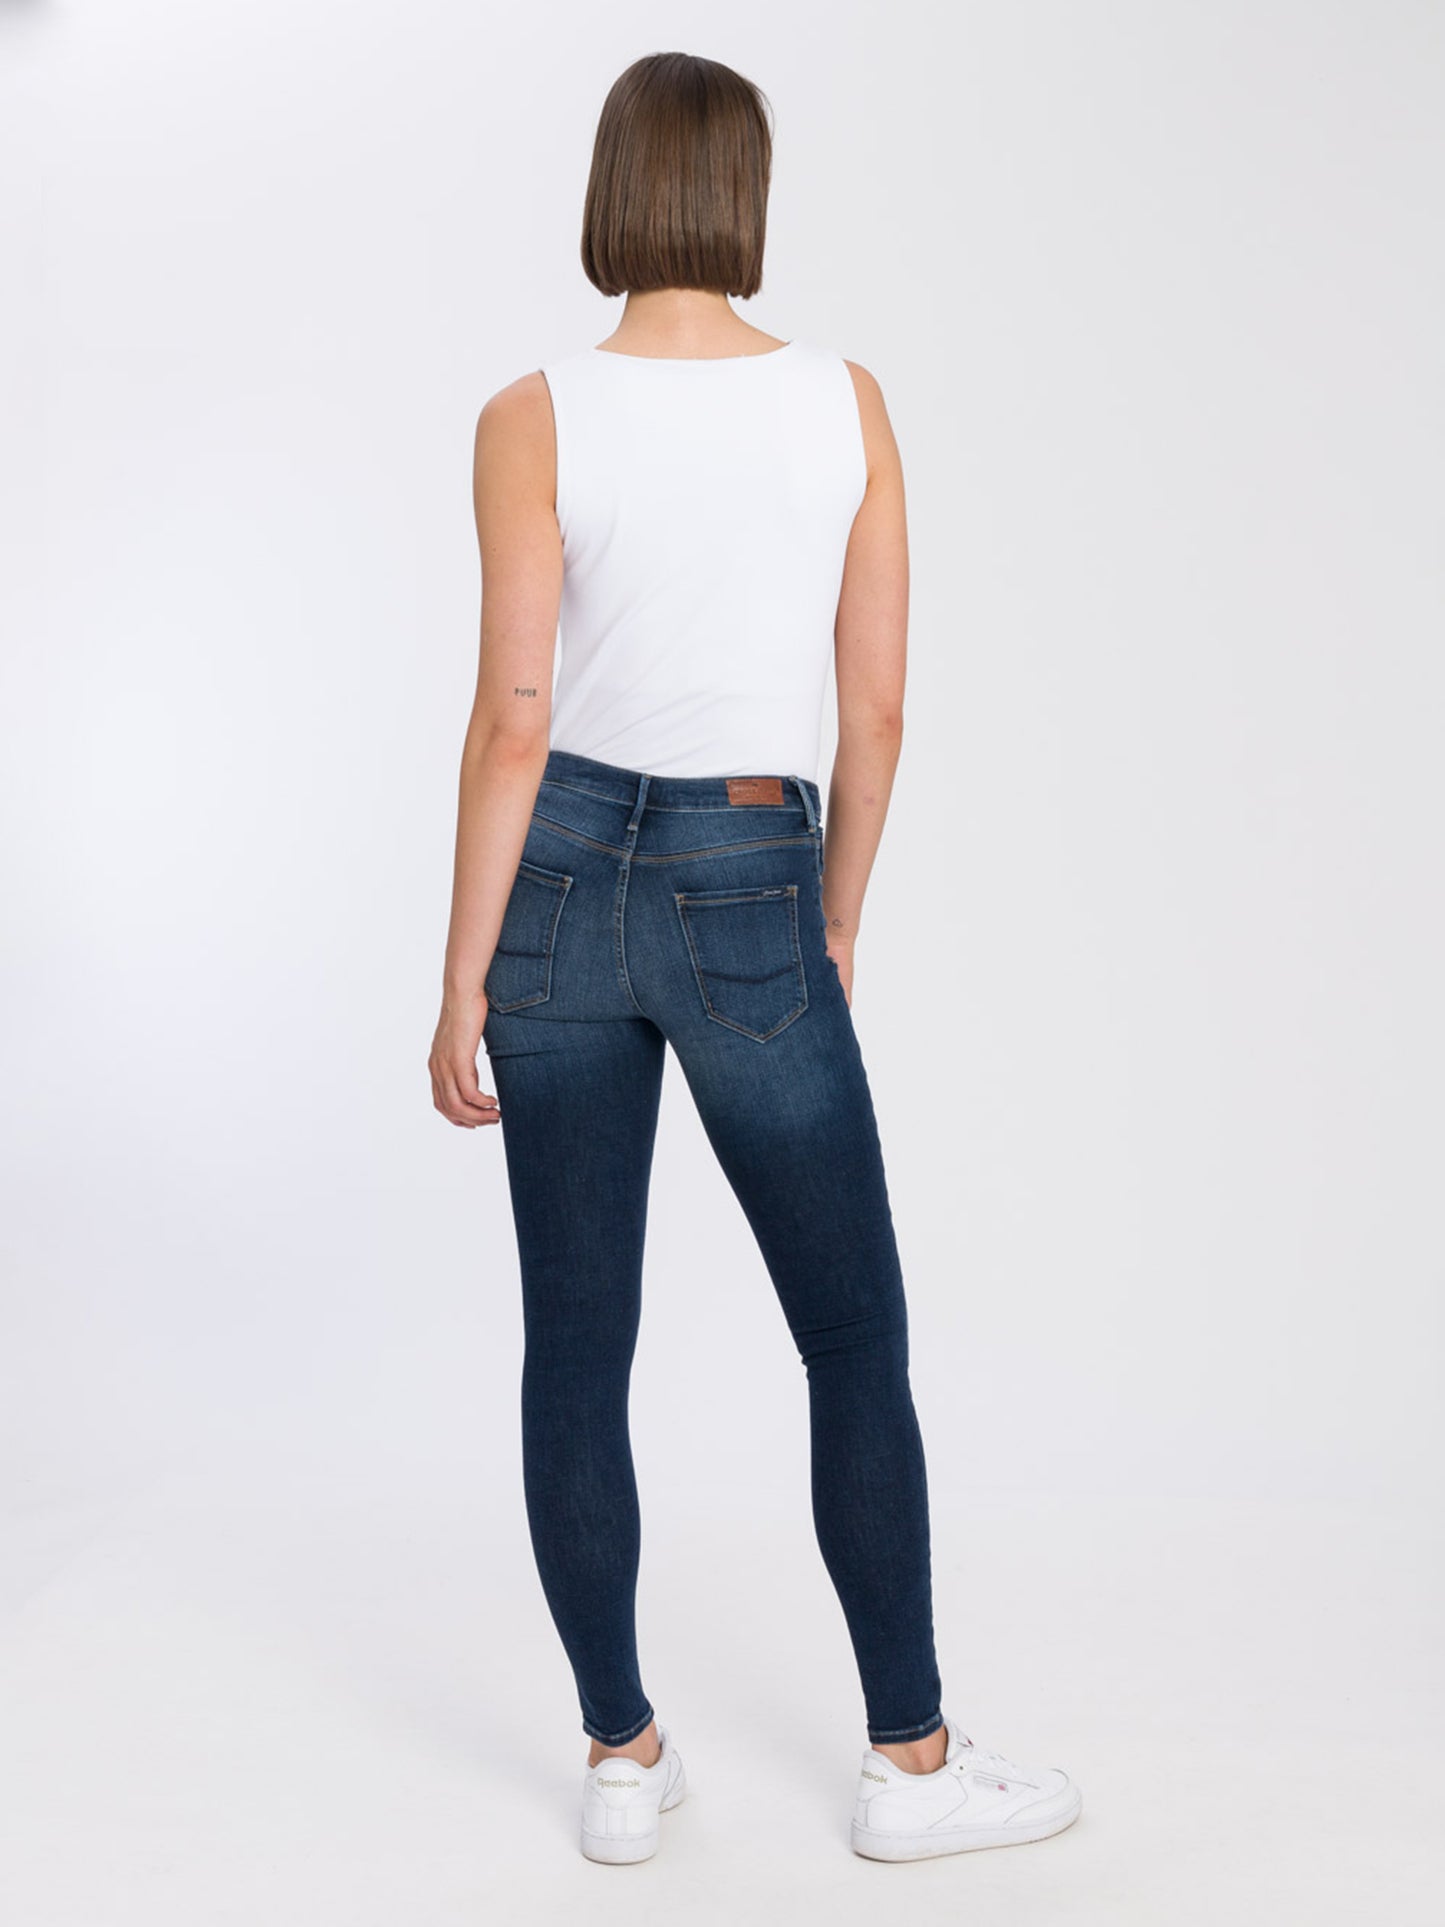 Giselle Damen Jeans Super Skinny Fit Mid Waist Ankle Lenght dunkelblau verwaschen